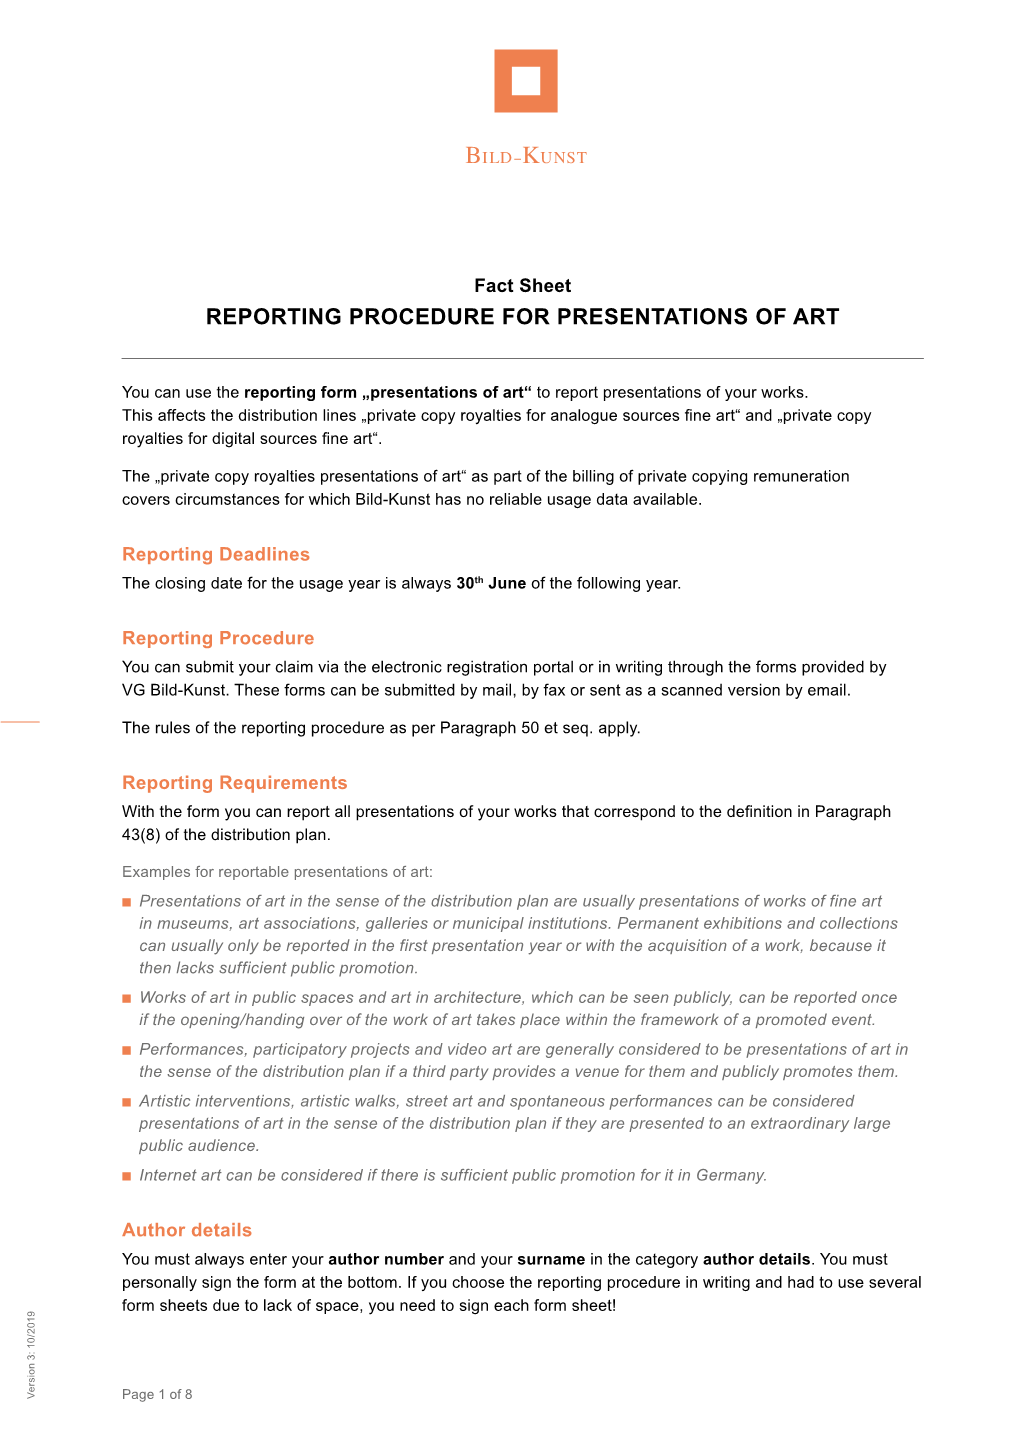 Reporting Procedure for Presentations of Art